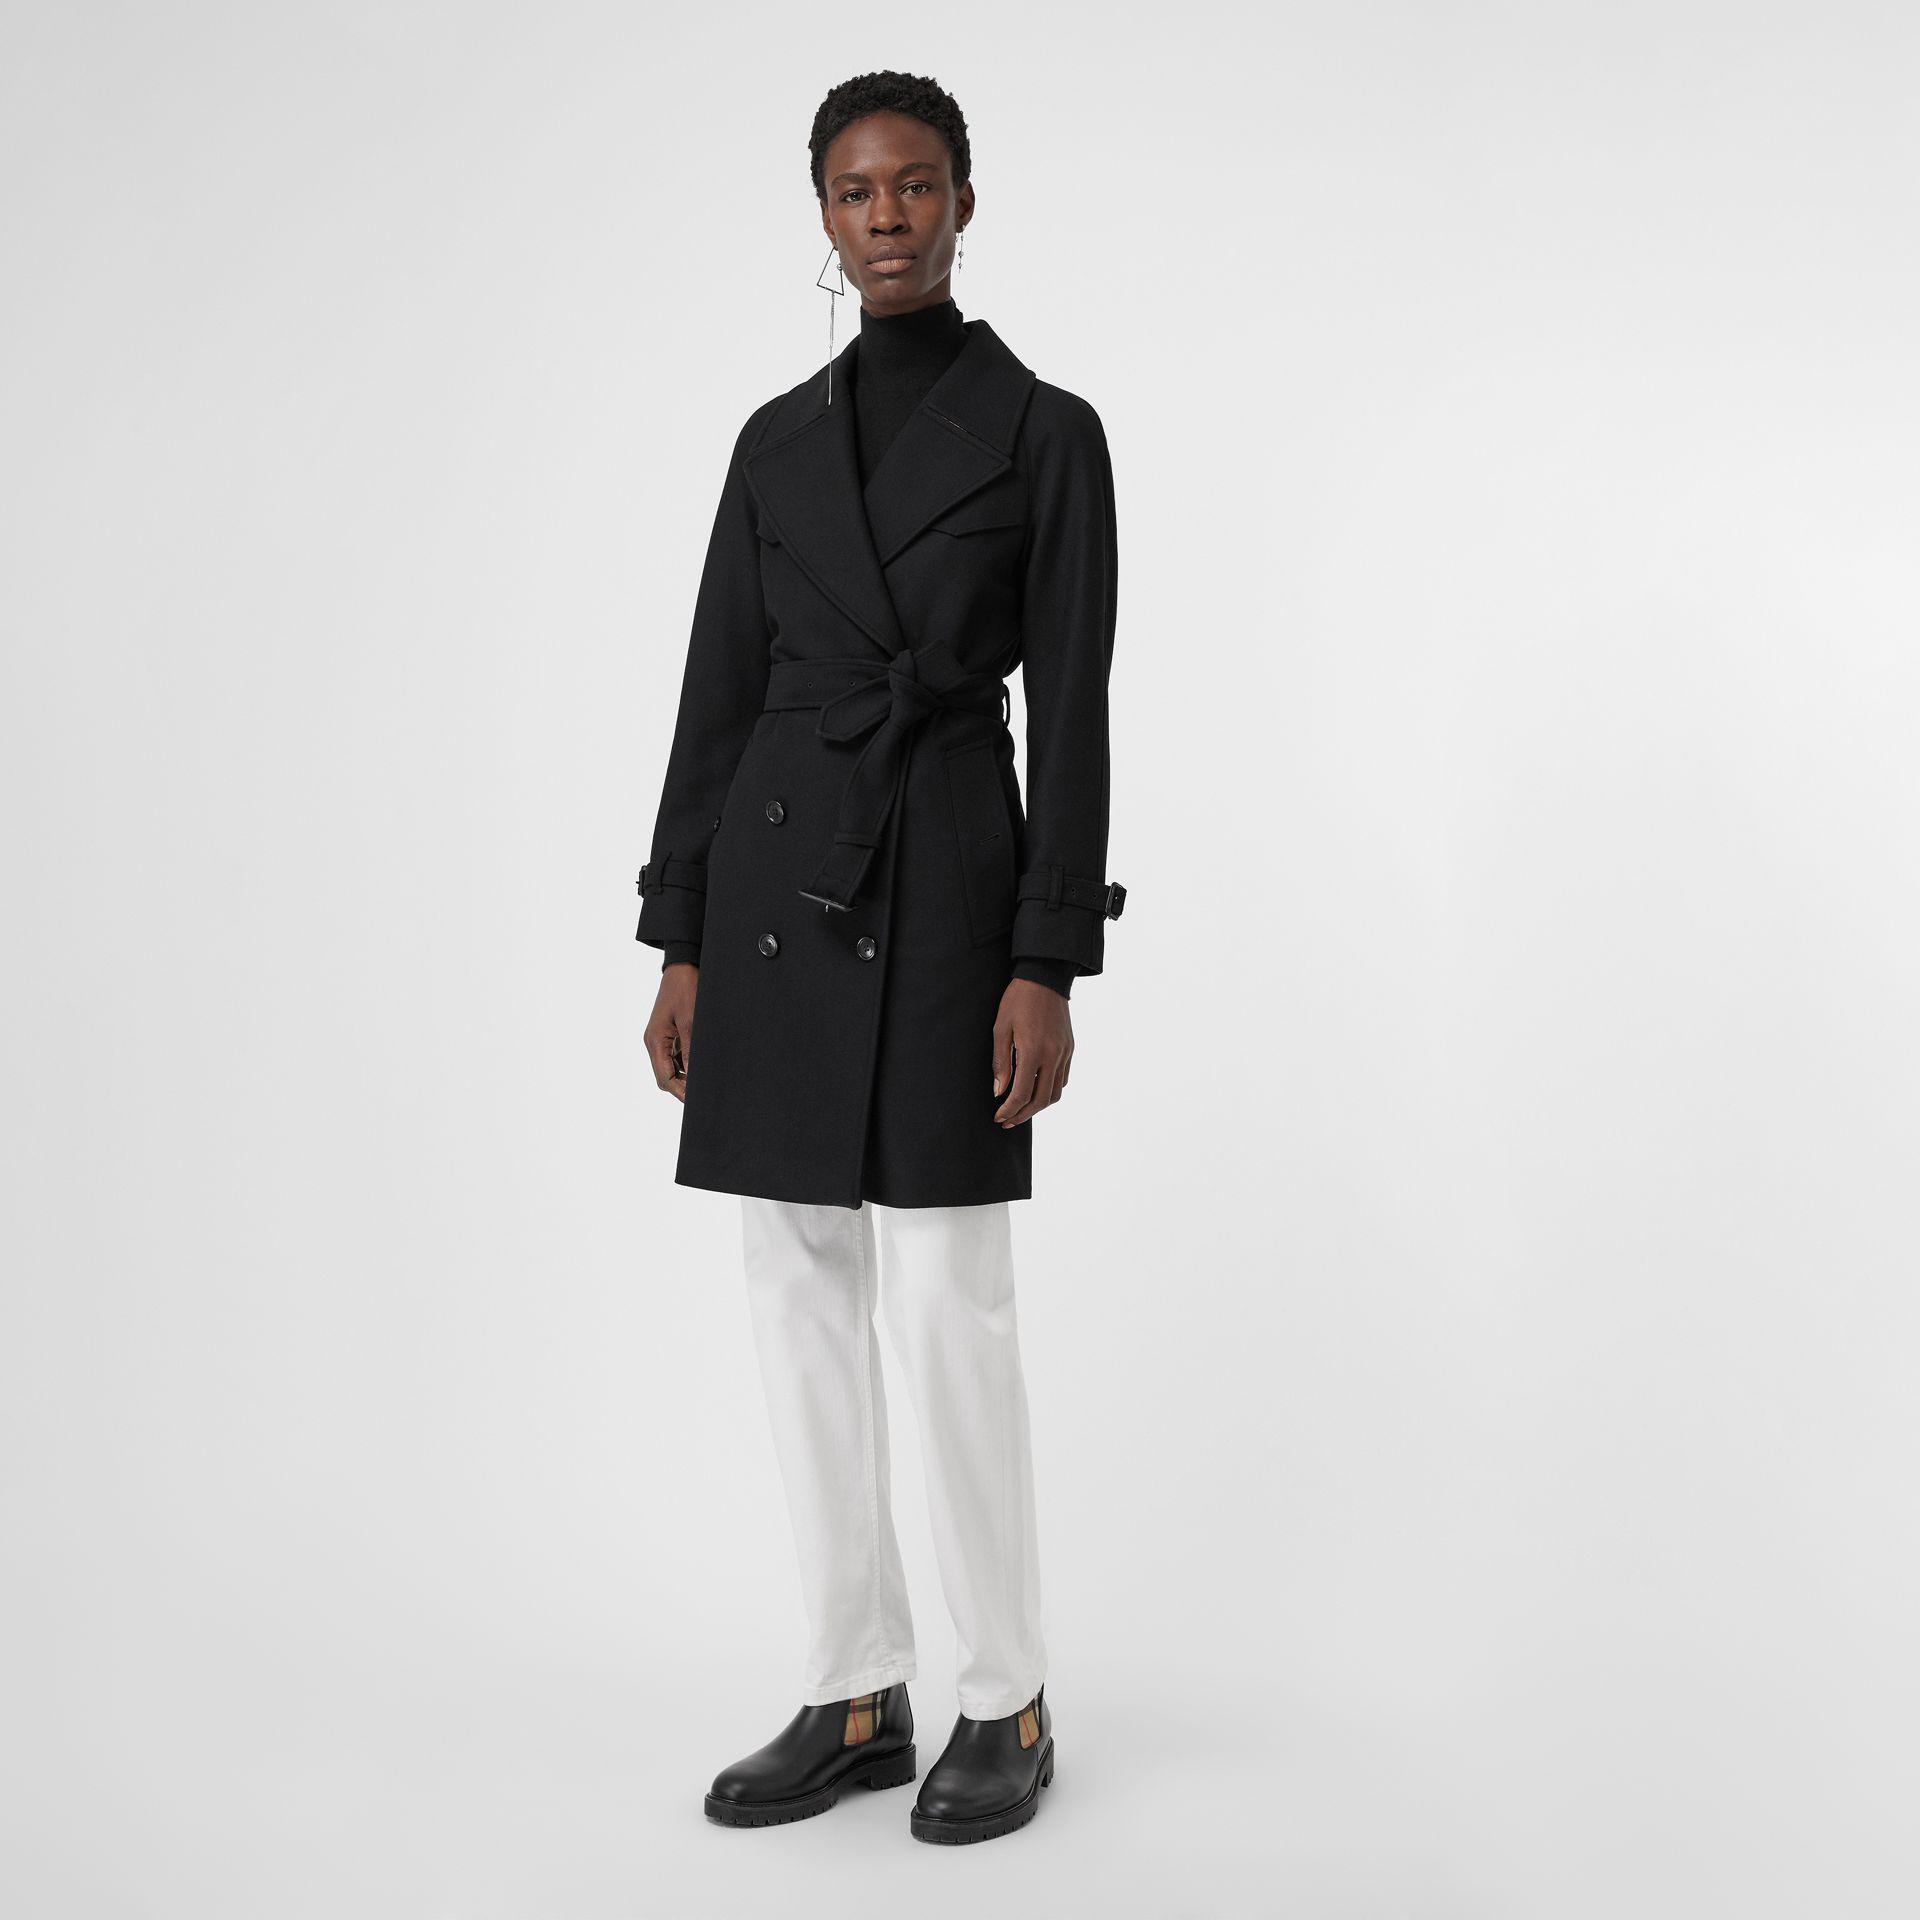 Burberry Herringbone Wool Cashmere Blend Trench Coat in Black - Lyst